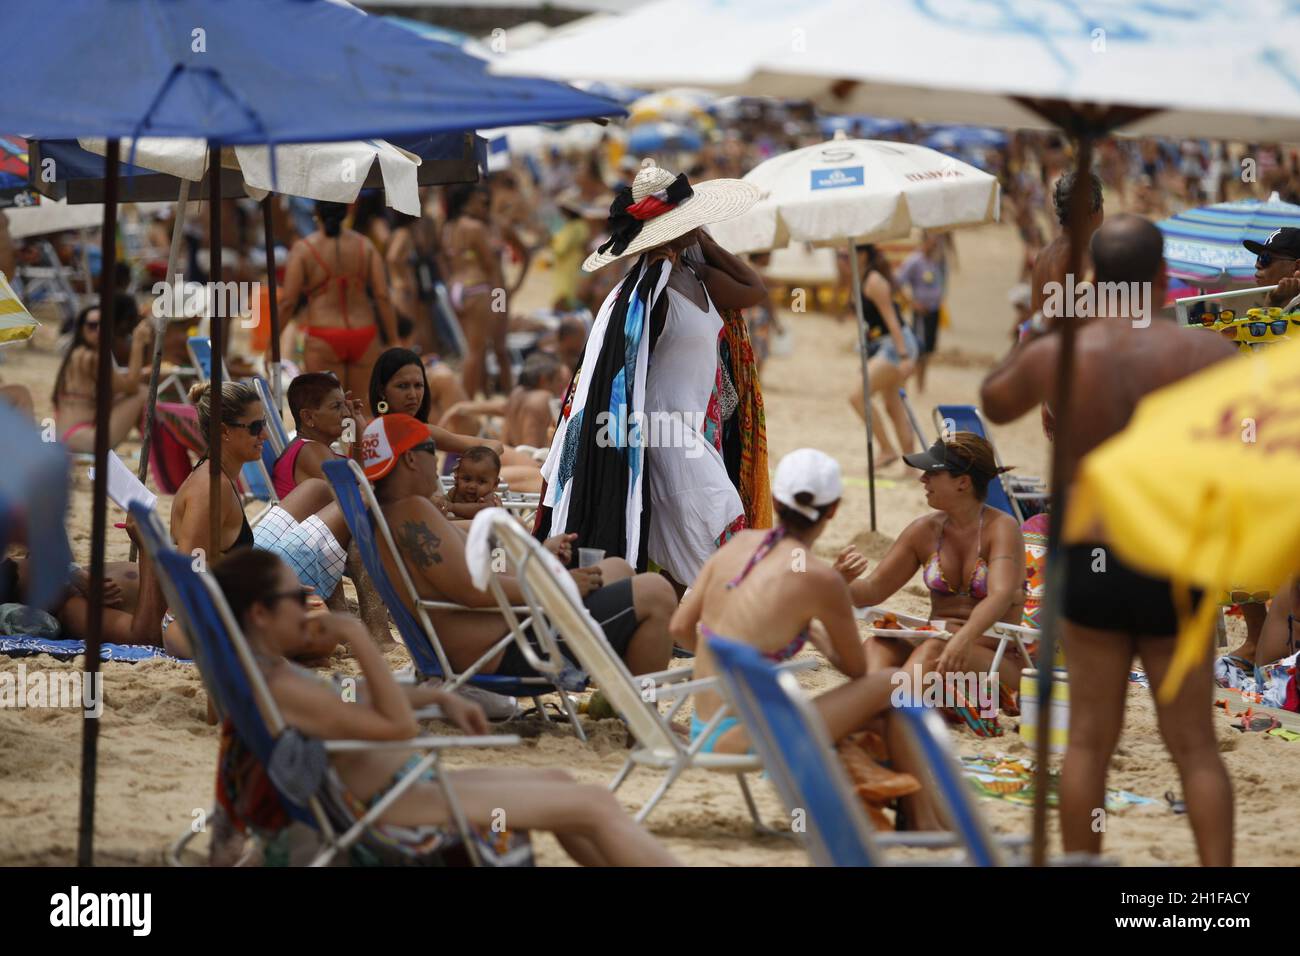 salvador, bahia / brazil - february 21, 2016: People are seen at the Porto da Barra beach in Salvador. *** Local Caption *** Stock Photo